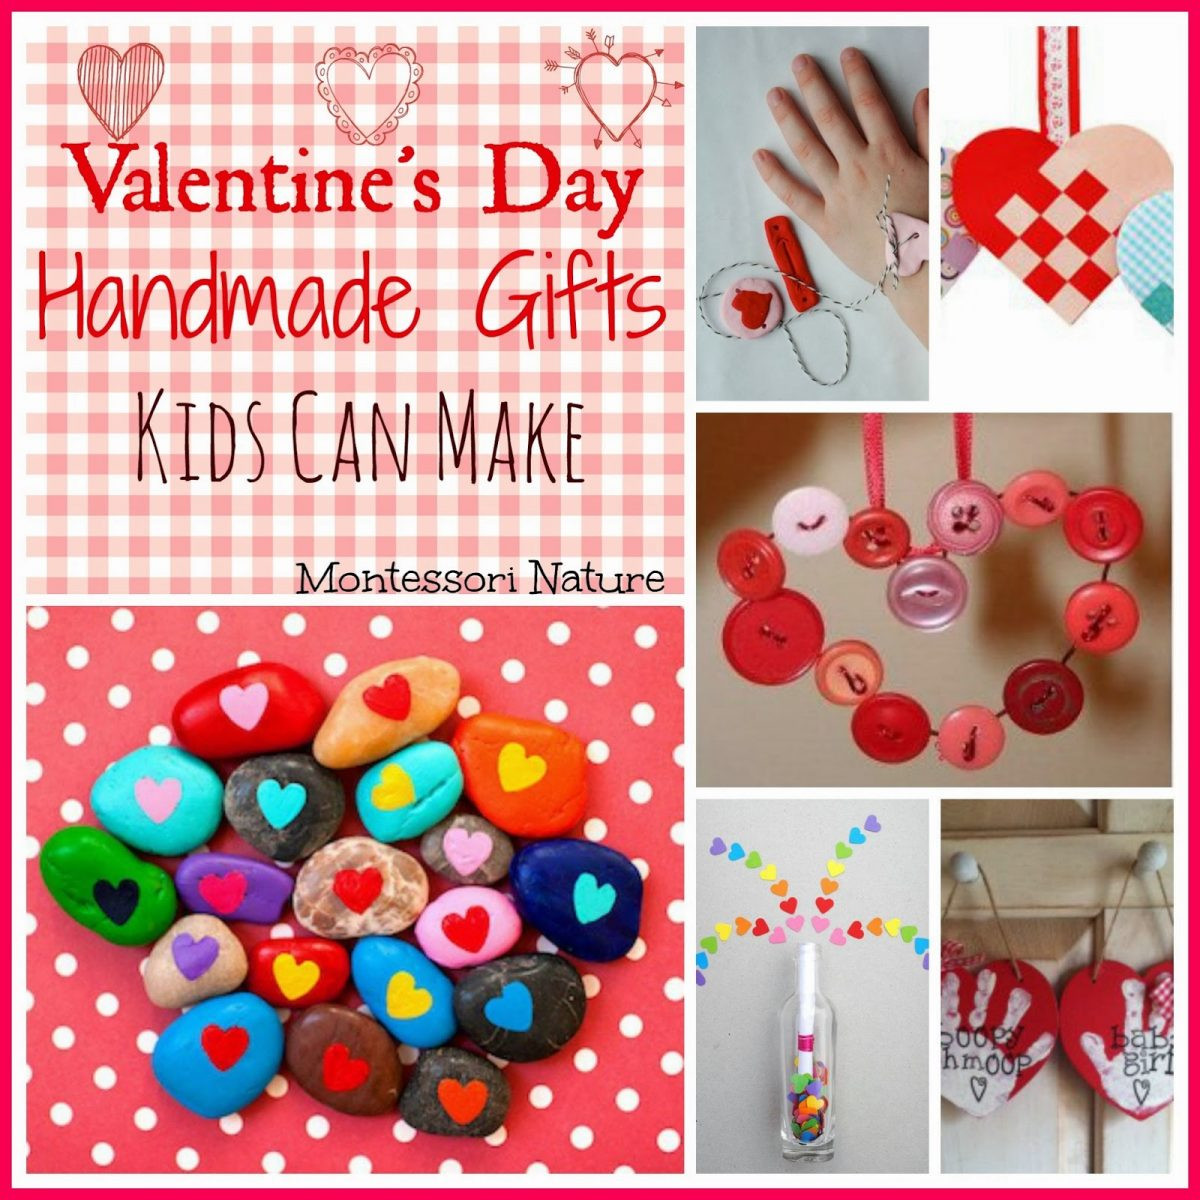 Valentine'S Day Gift Ideas For Kids
 Valentine s Day Handmade Gifts Kids Can Make Montessori